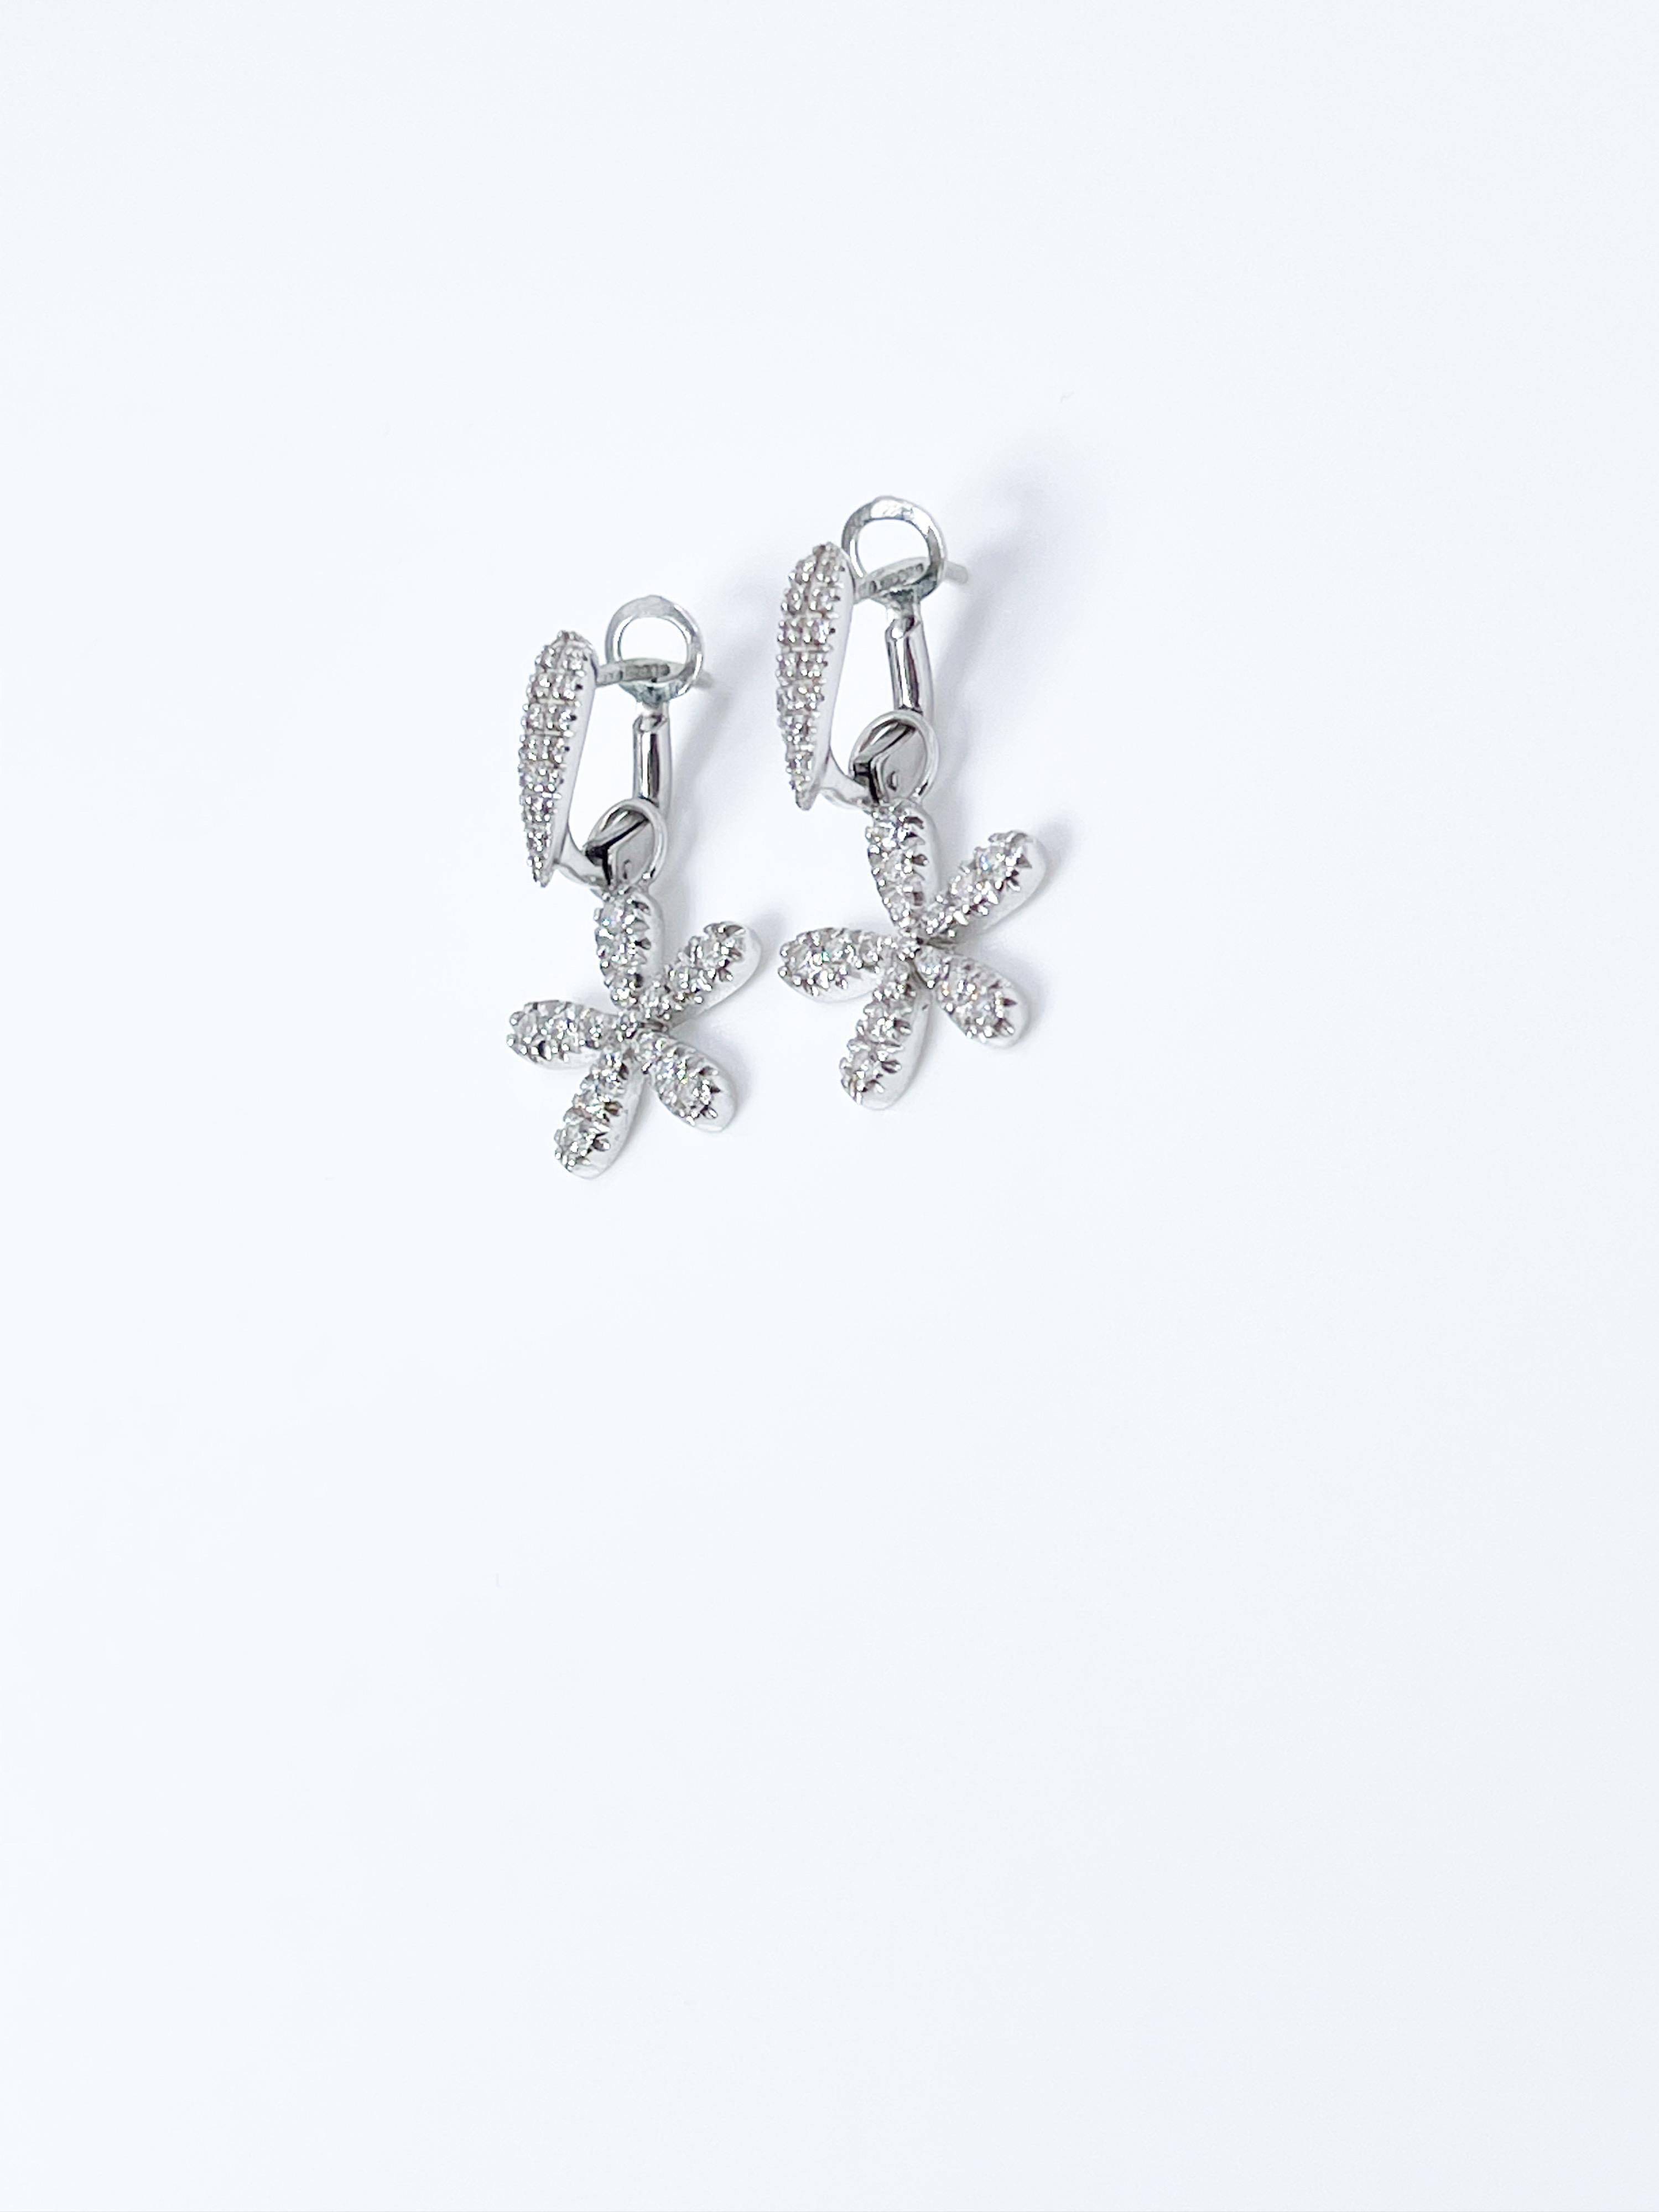 Modern Flower Diamond Earrings 18KT White Gold Unique Dangling Two Ways Design For Sale